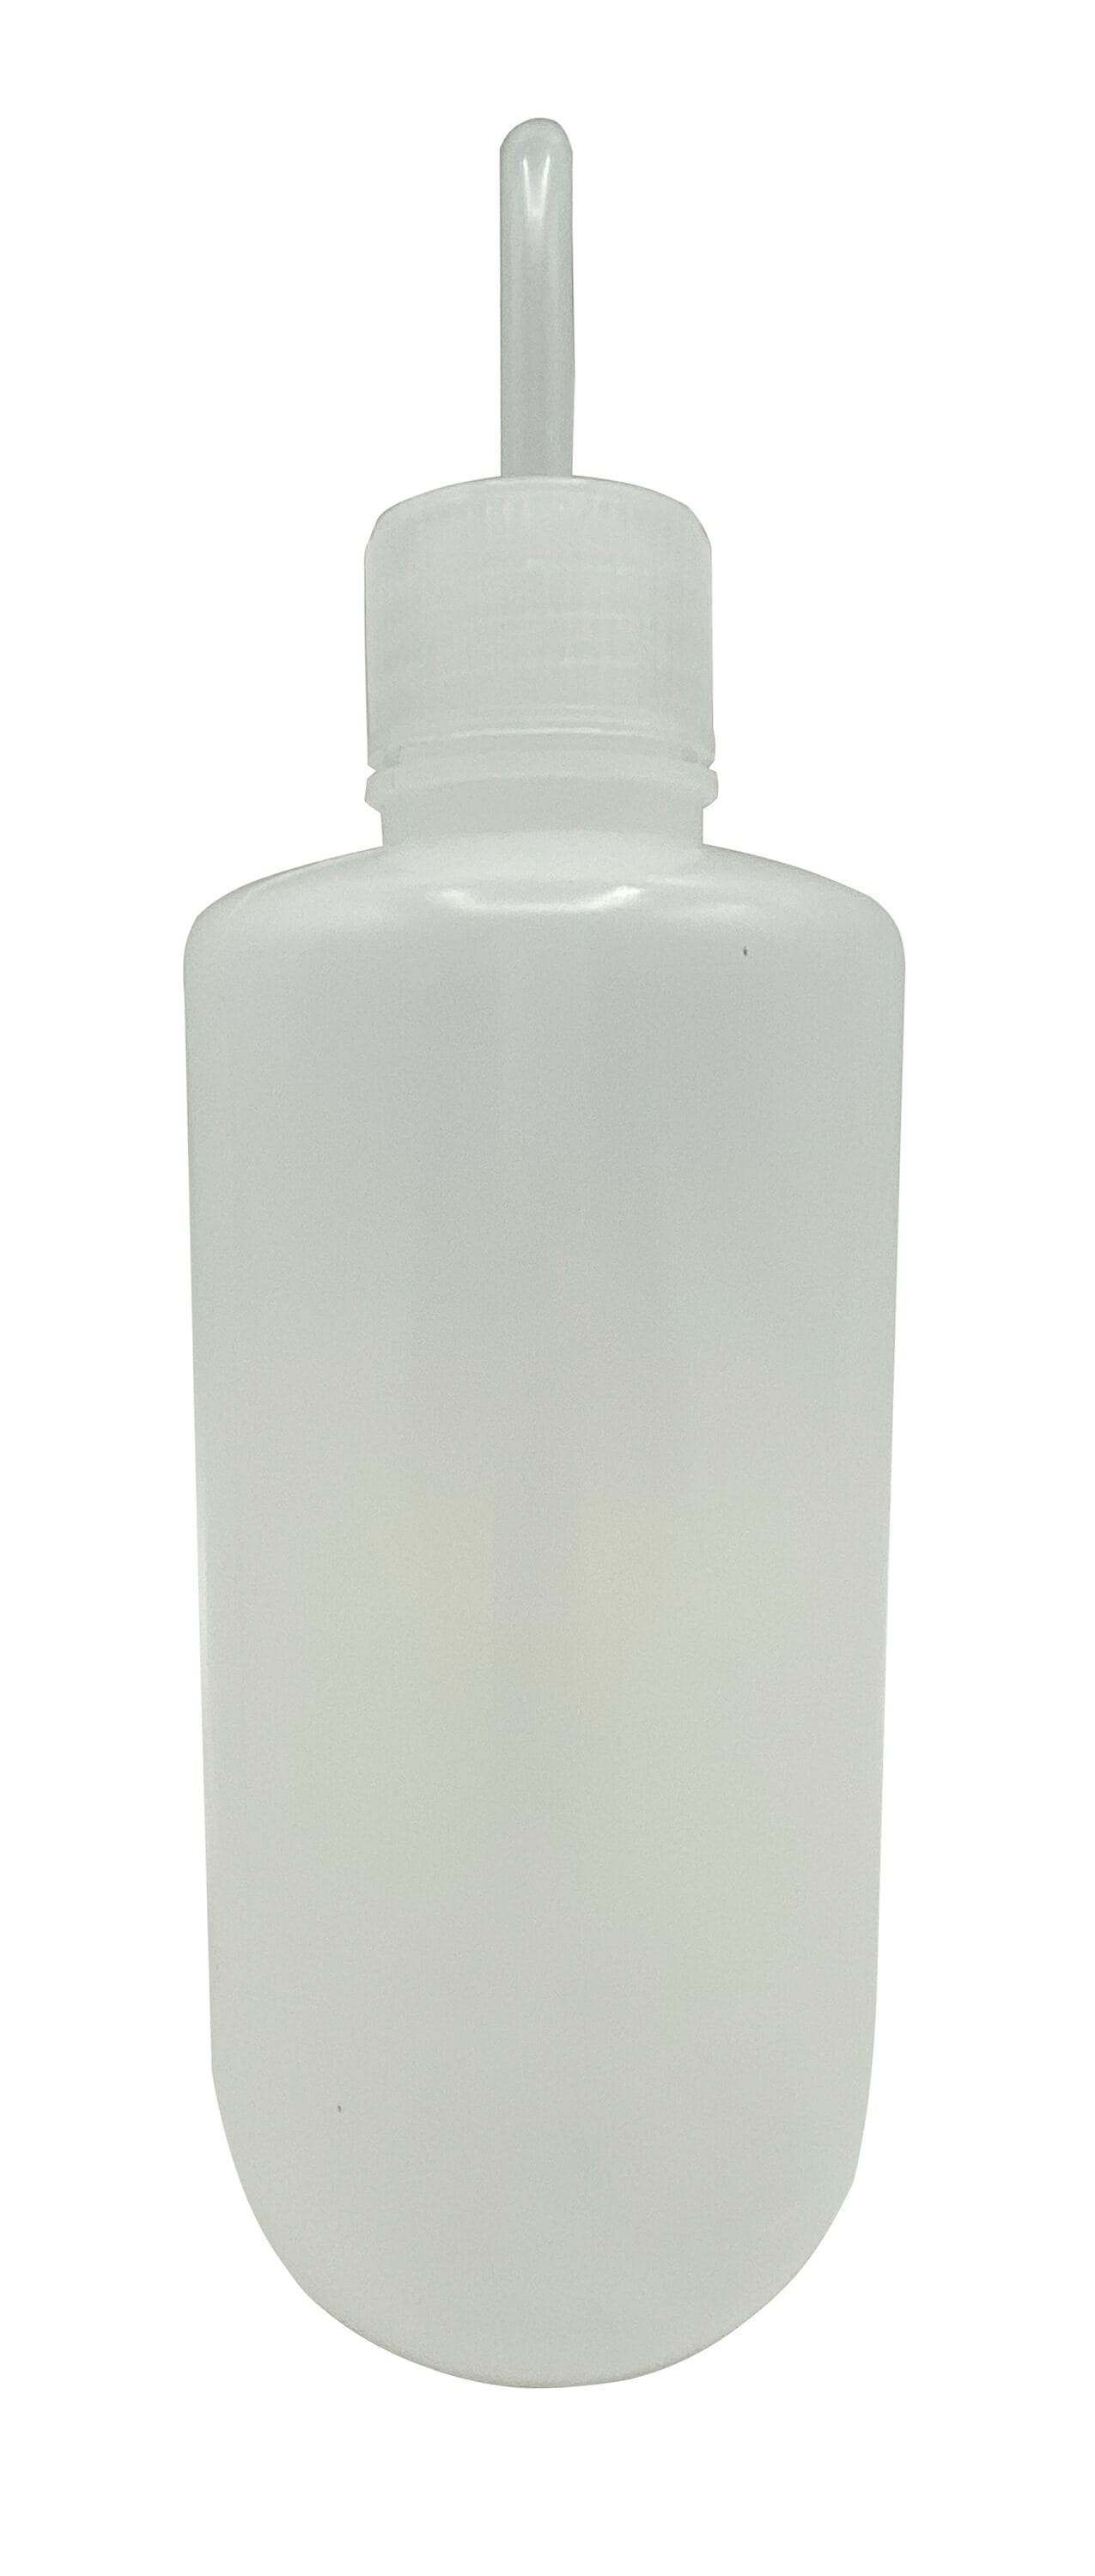 4Pcs Plastic Squeeze Bottles, 250ml Squirt Bottles for Liquids Squirt  Bottle Succulent Watering, Safety Rinse Wash Bottle Reuseable Squeeze  Bottles